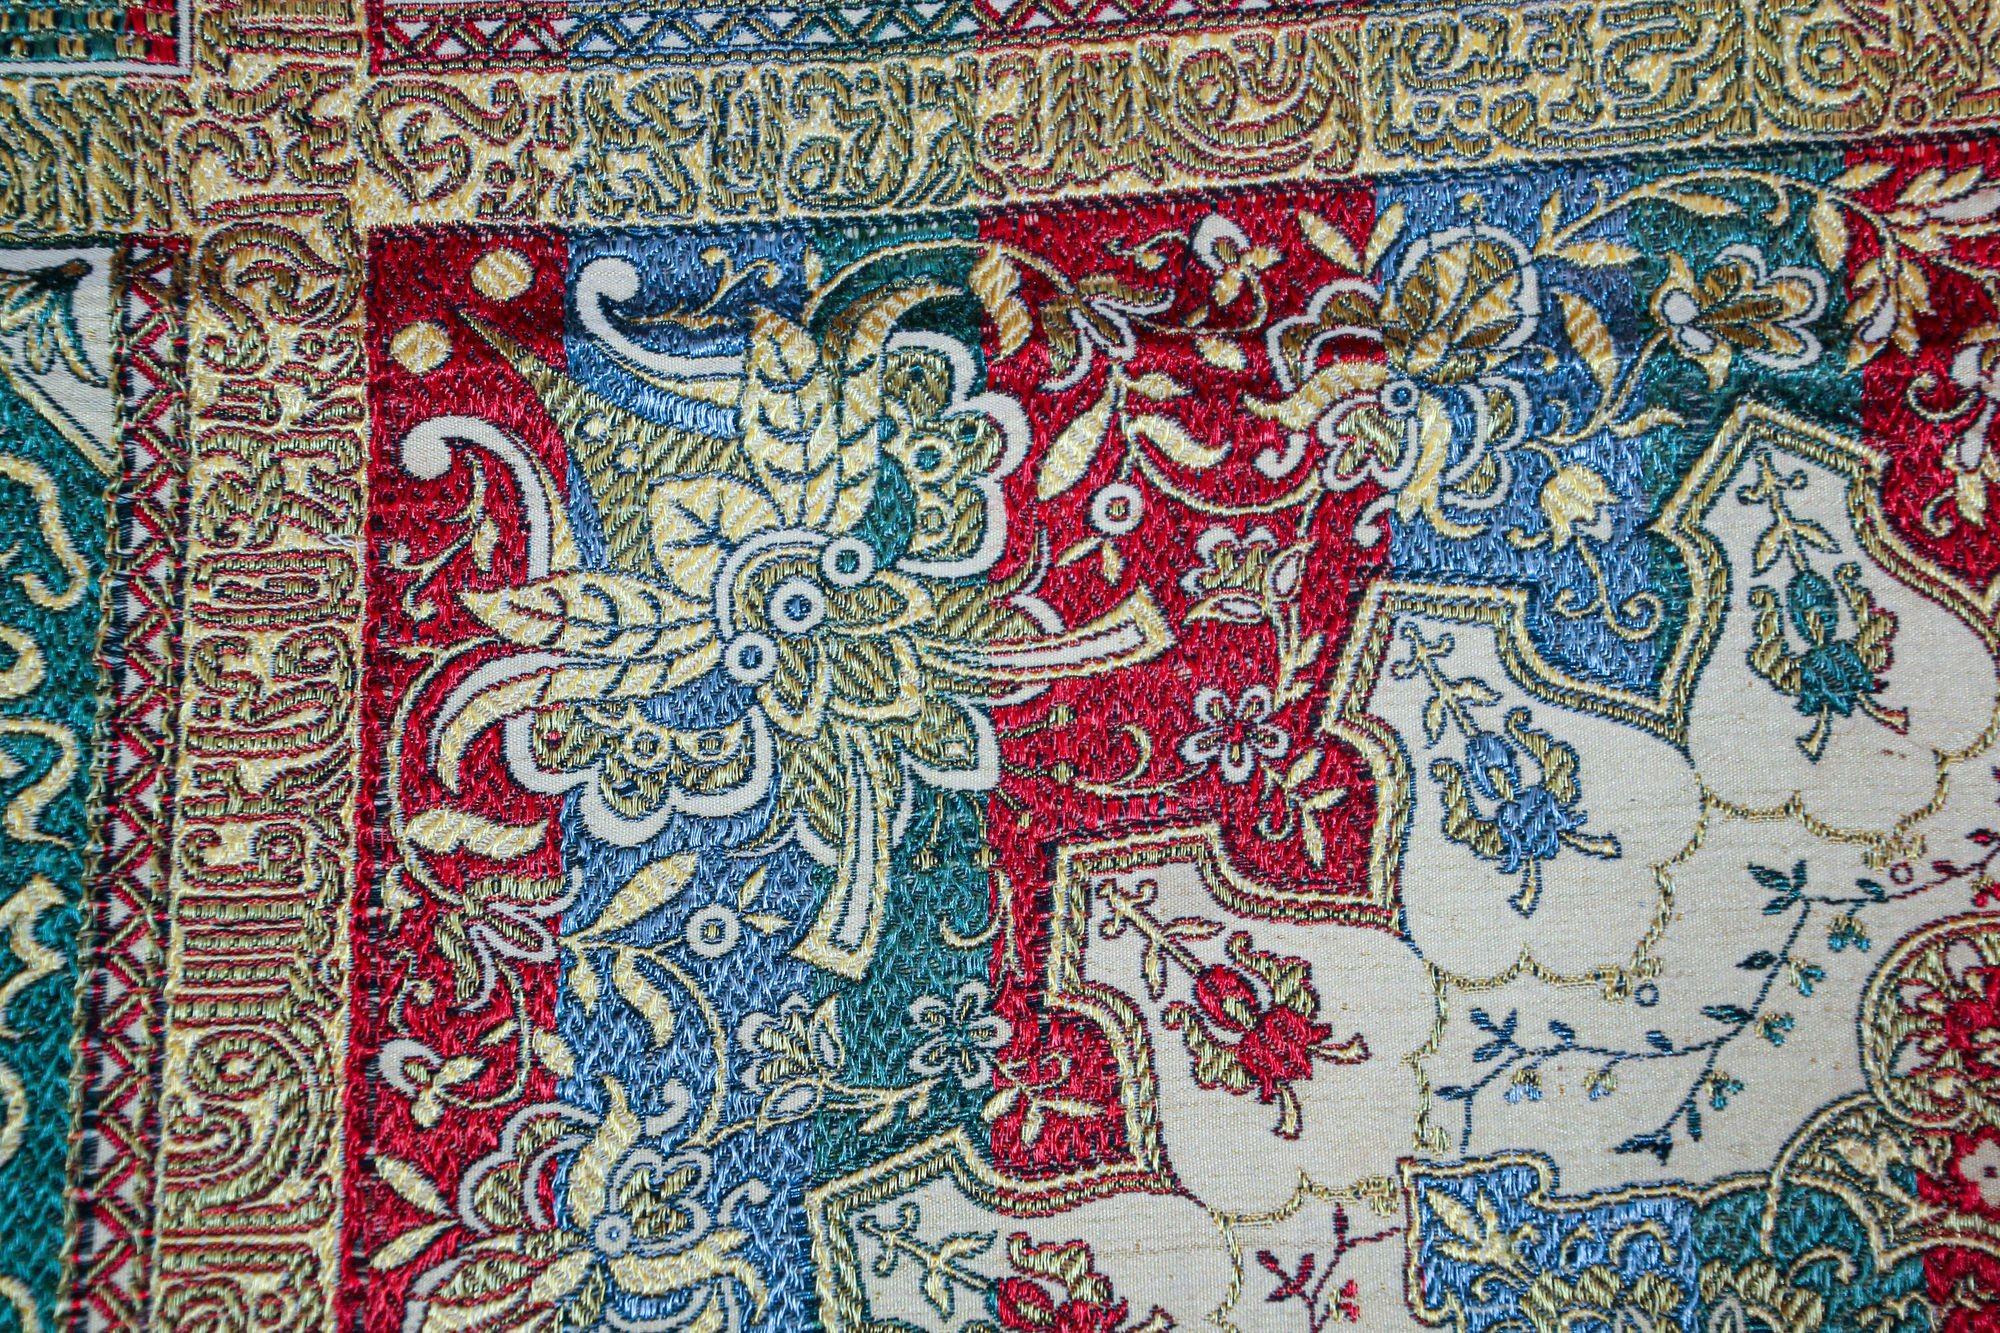 1920s Antique Granada Spain Moorish Islamic Tapestry with Arabic Writing 5